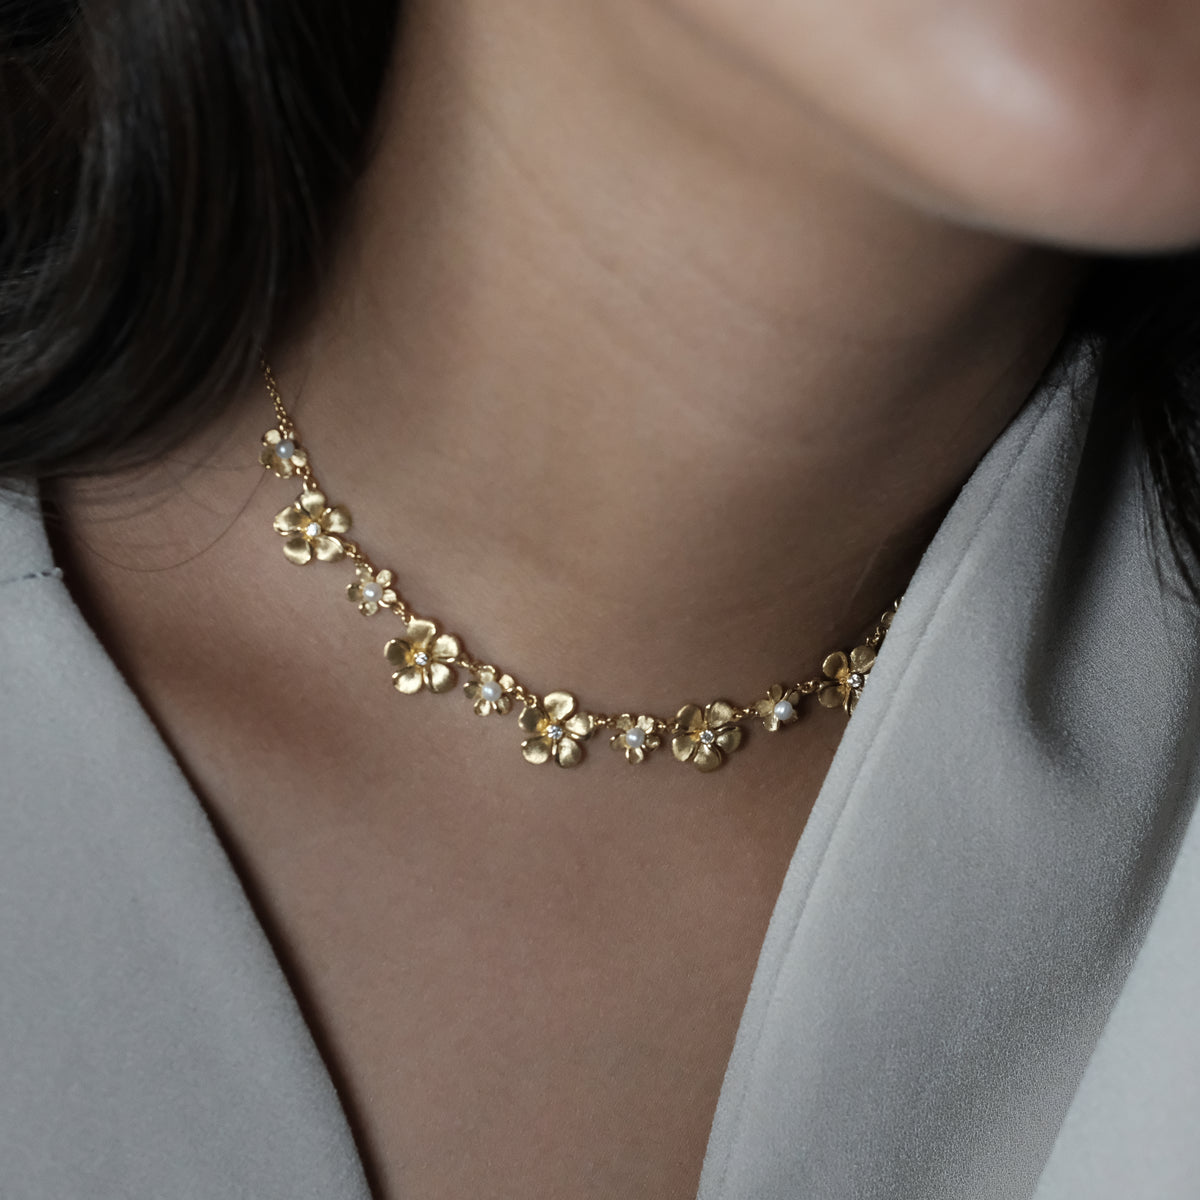 Diamond Kalachuchi Necklace, with Pearls, Assorted Sizes, Satin Finish